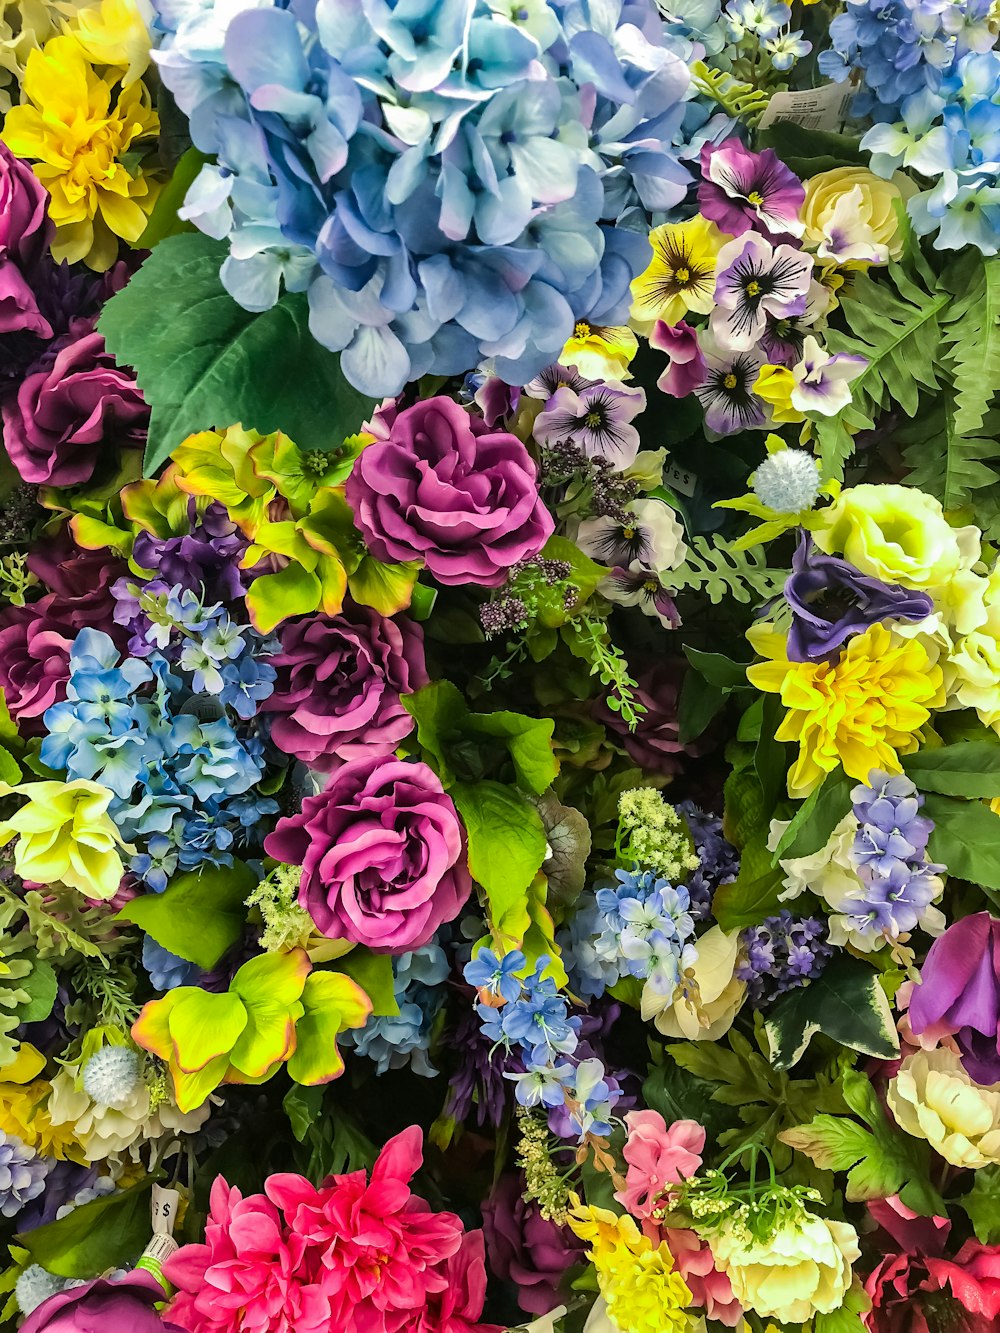 Best 100+ Floral Pictures  Download Free Images on Unsplash